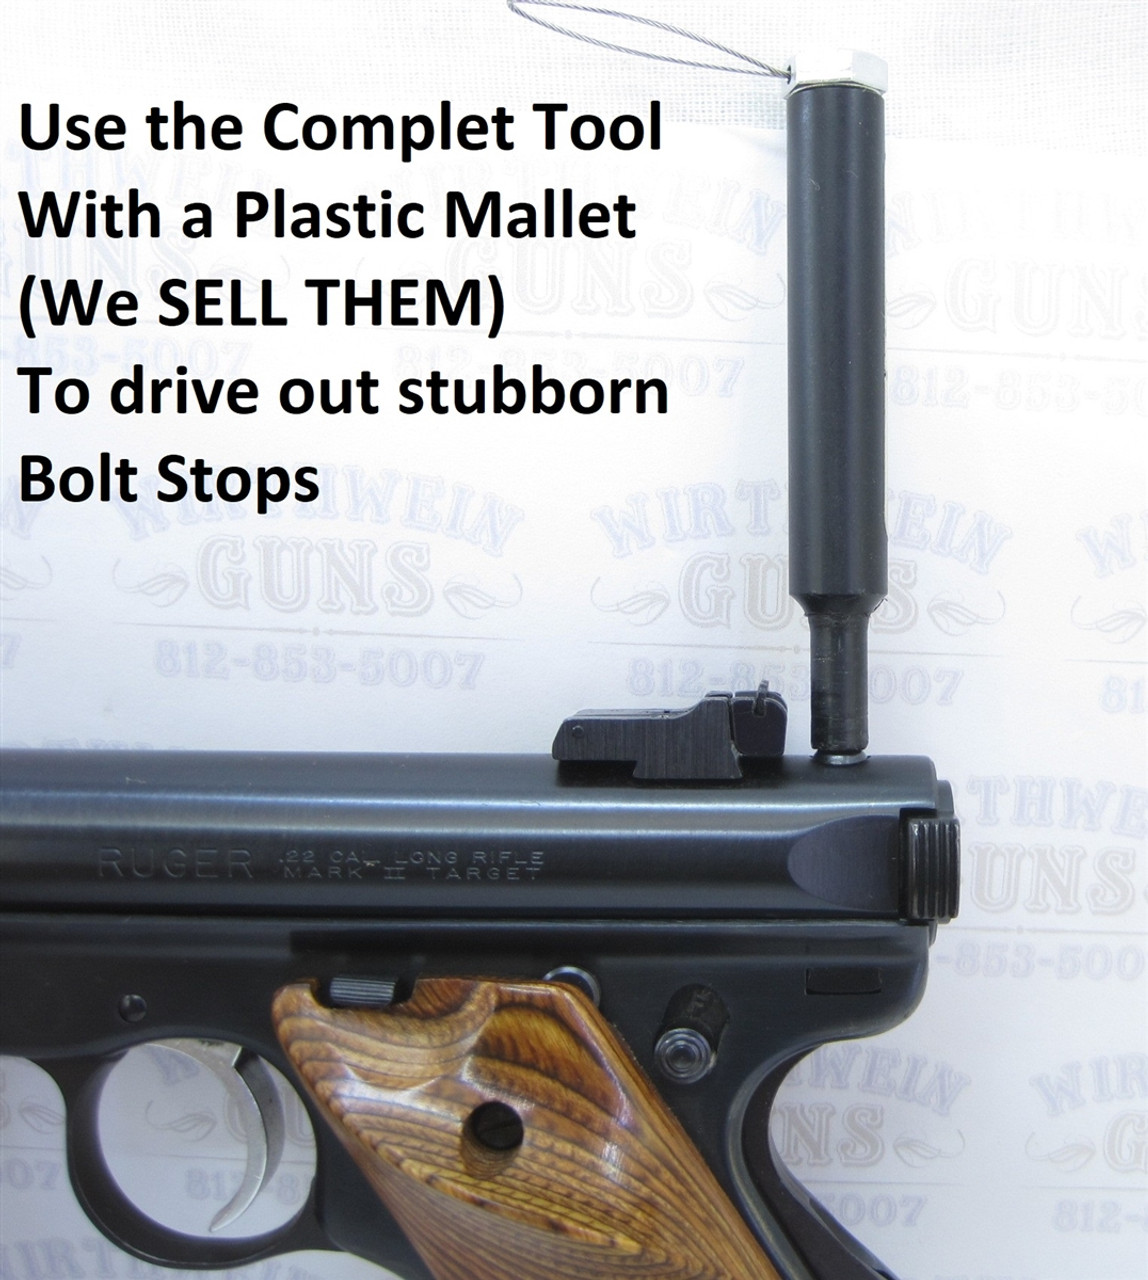 Gunsmither Pistol Pal Tool for Ruger Mark 1 2 3 both Standard and 22/45 Pistols